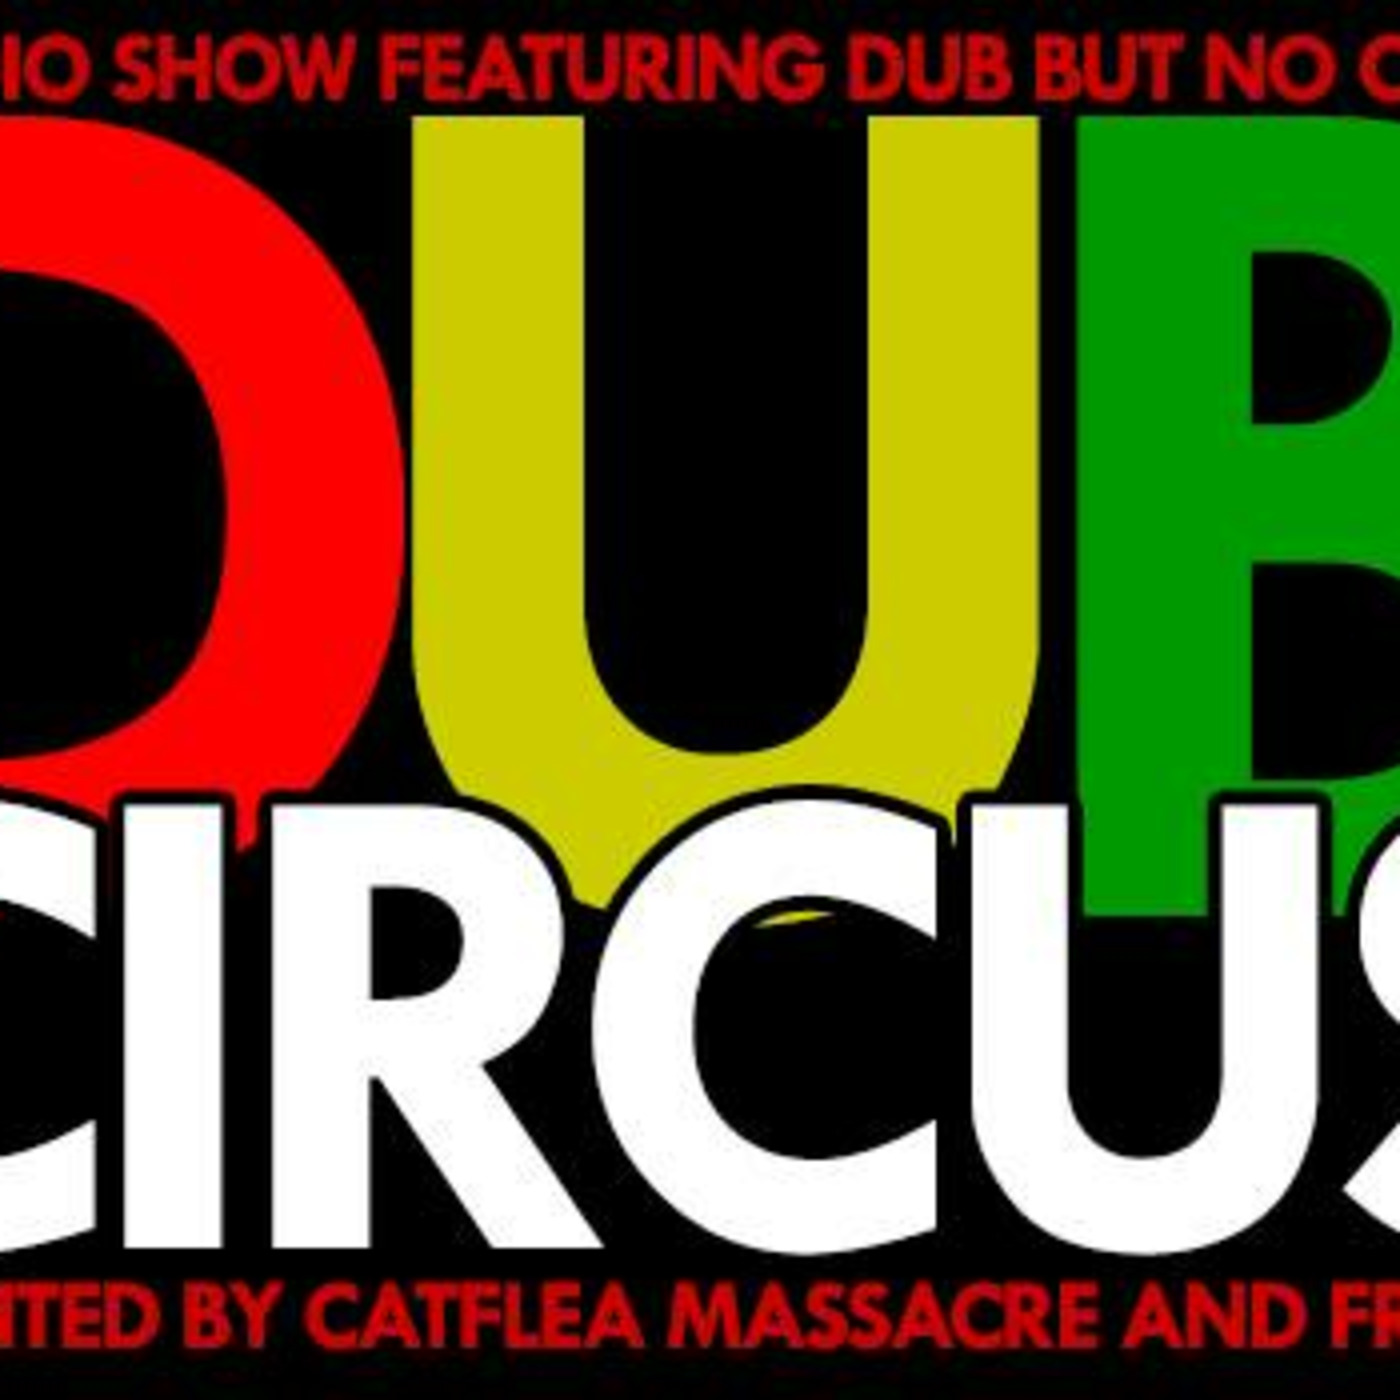 Episode 2730: Dub Circus Show 213 On bootboyradio.net